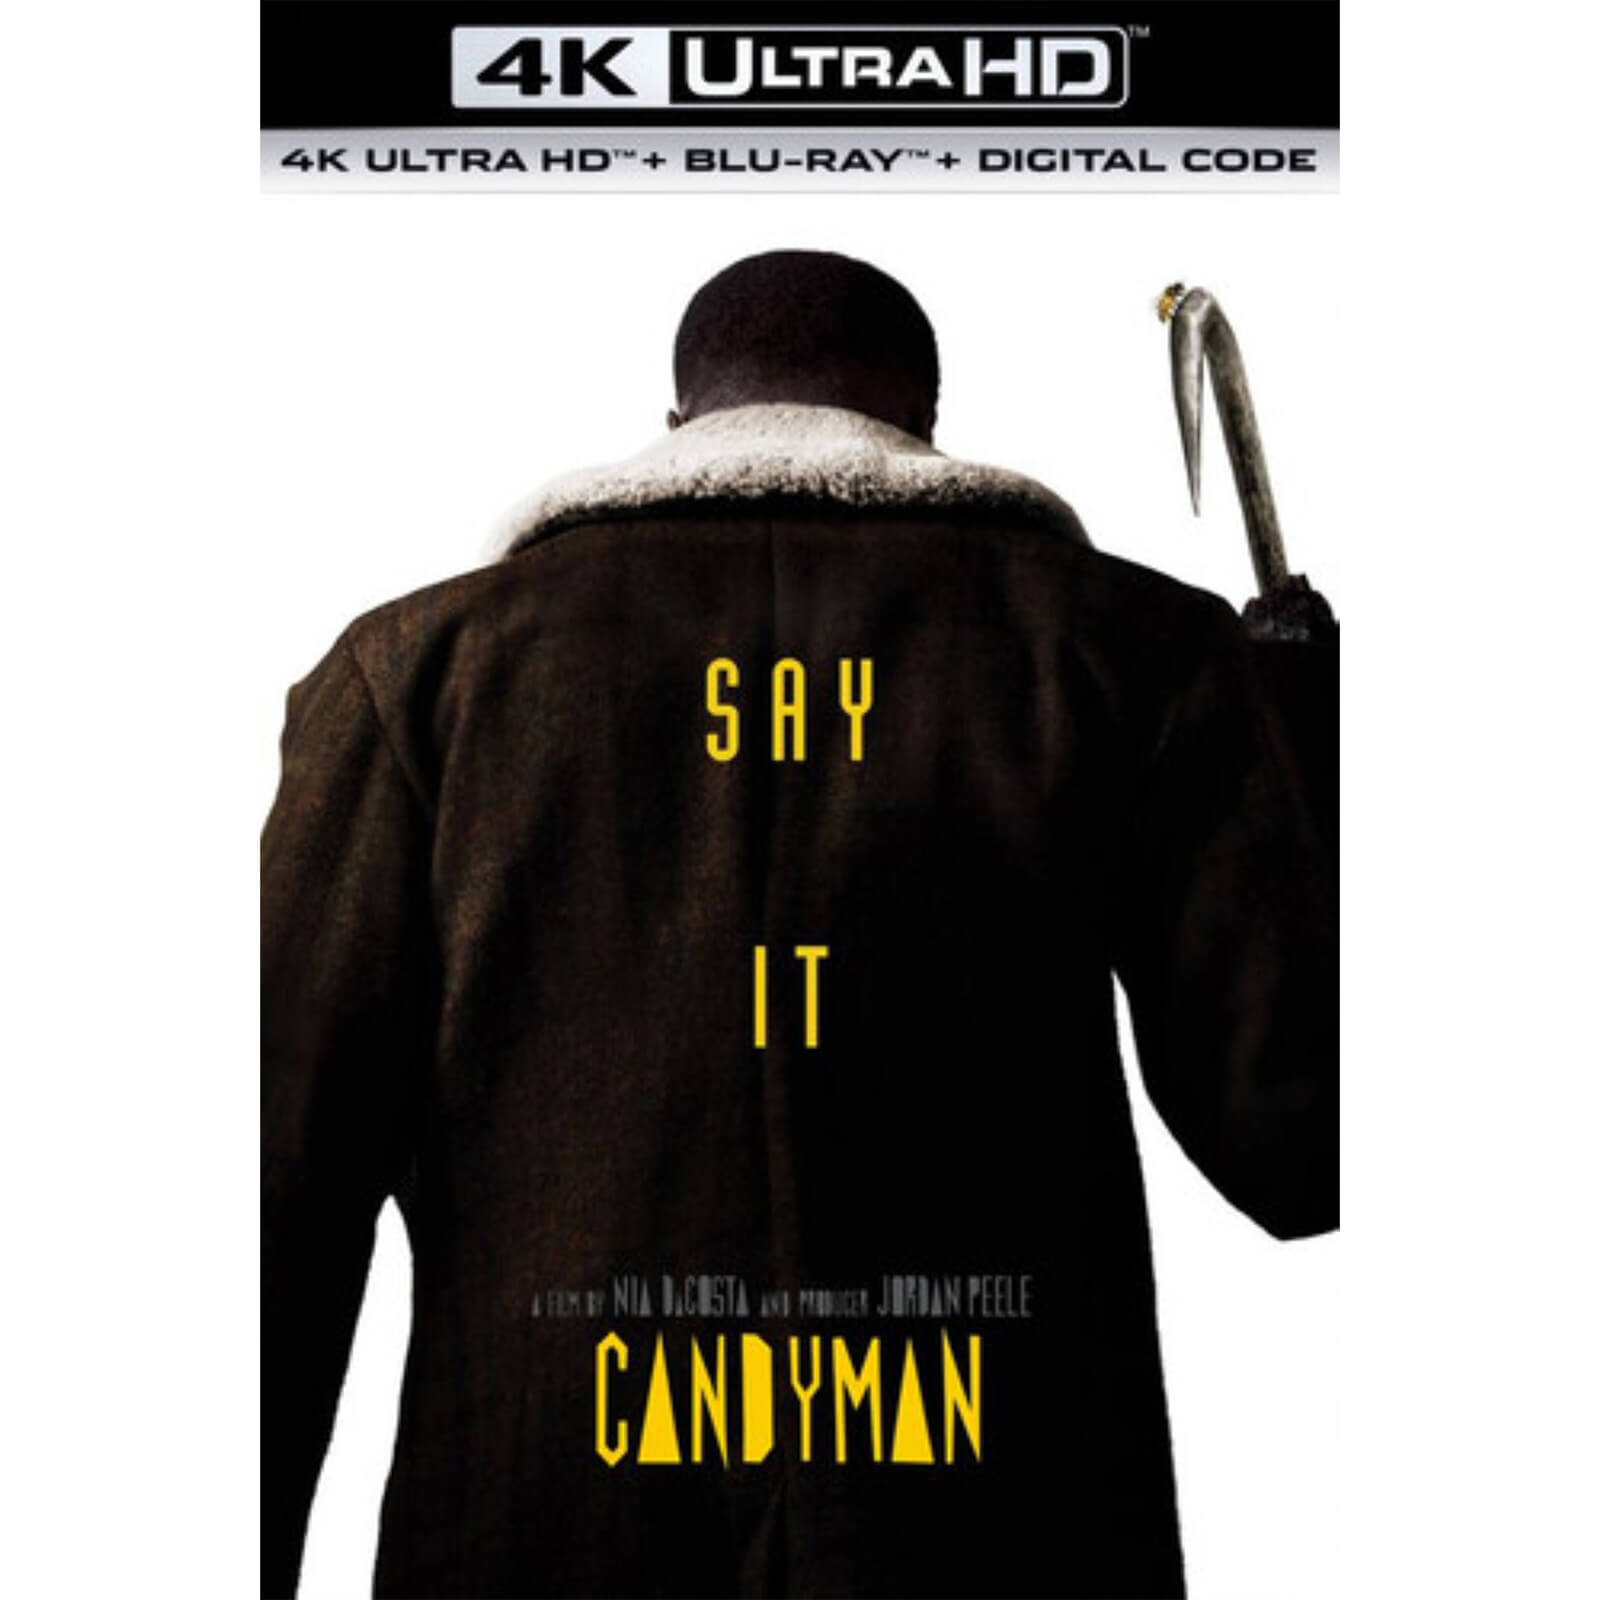 Candyman - 4K Ultra HD (Includes Blu-ray) (US Import)